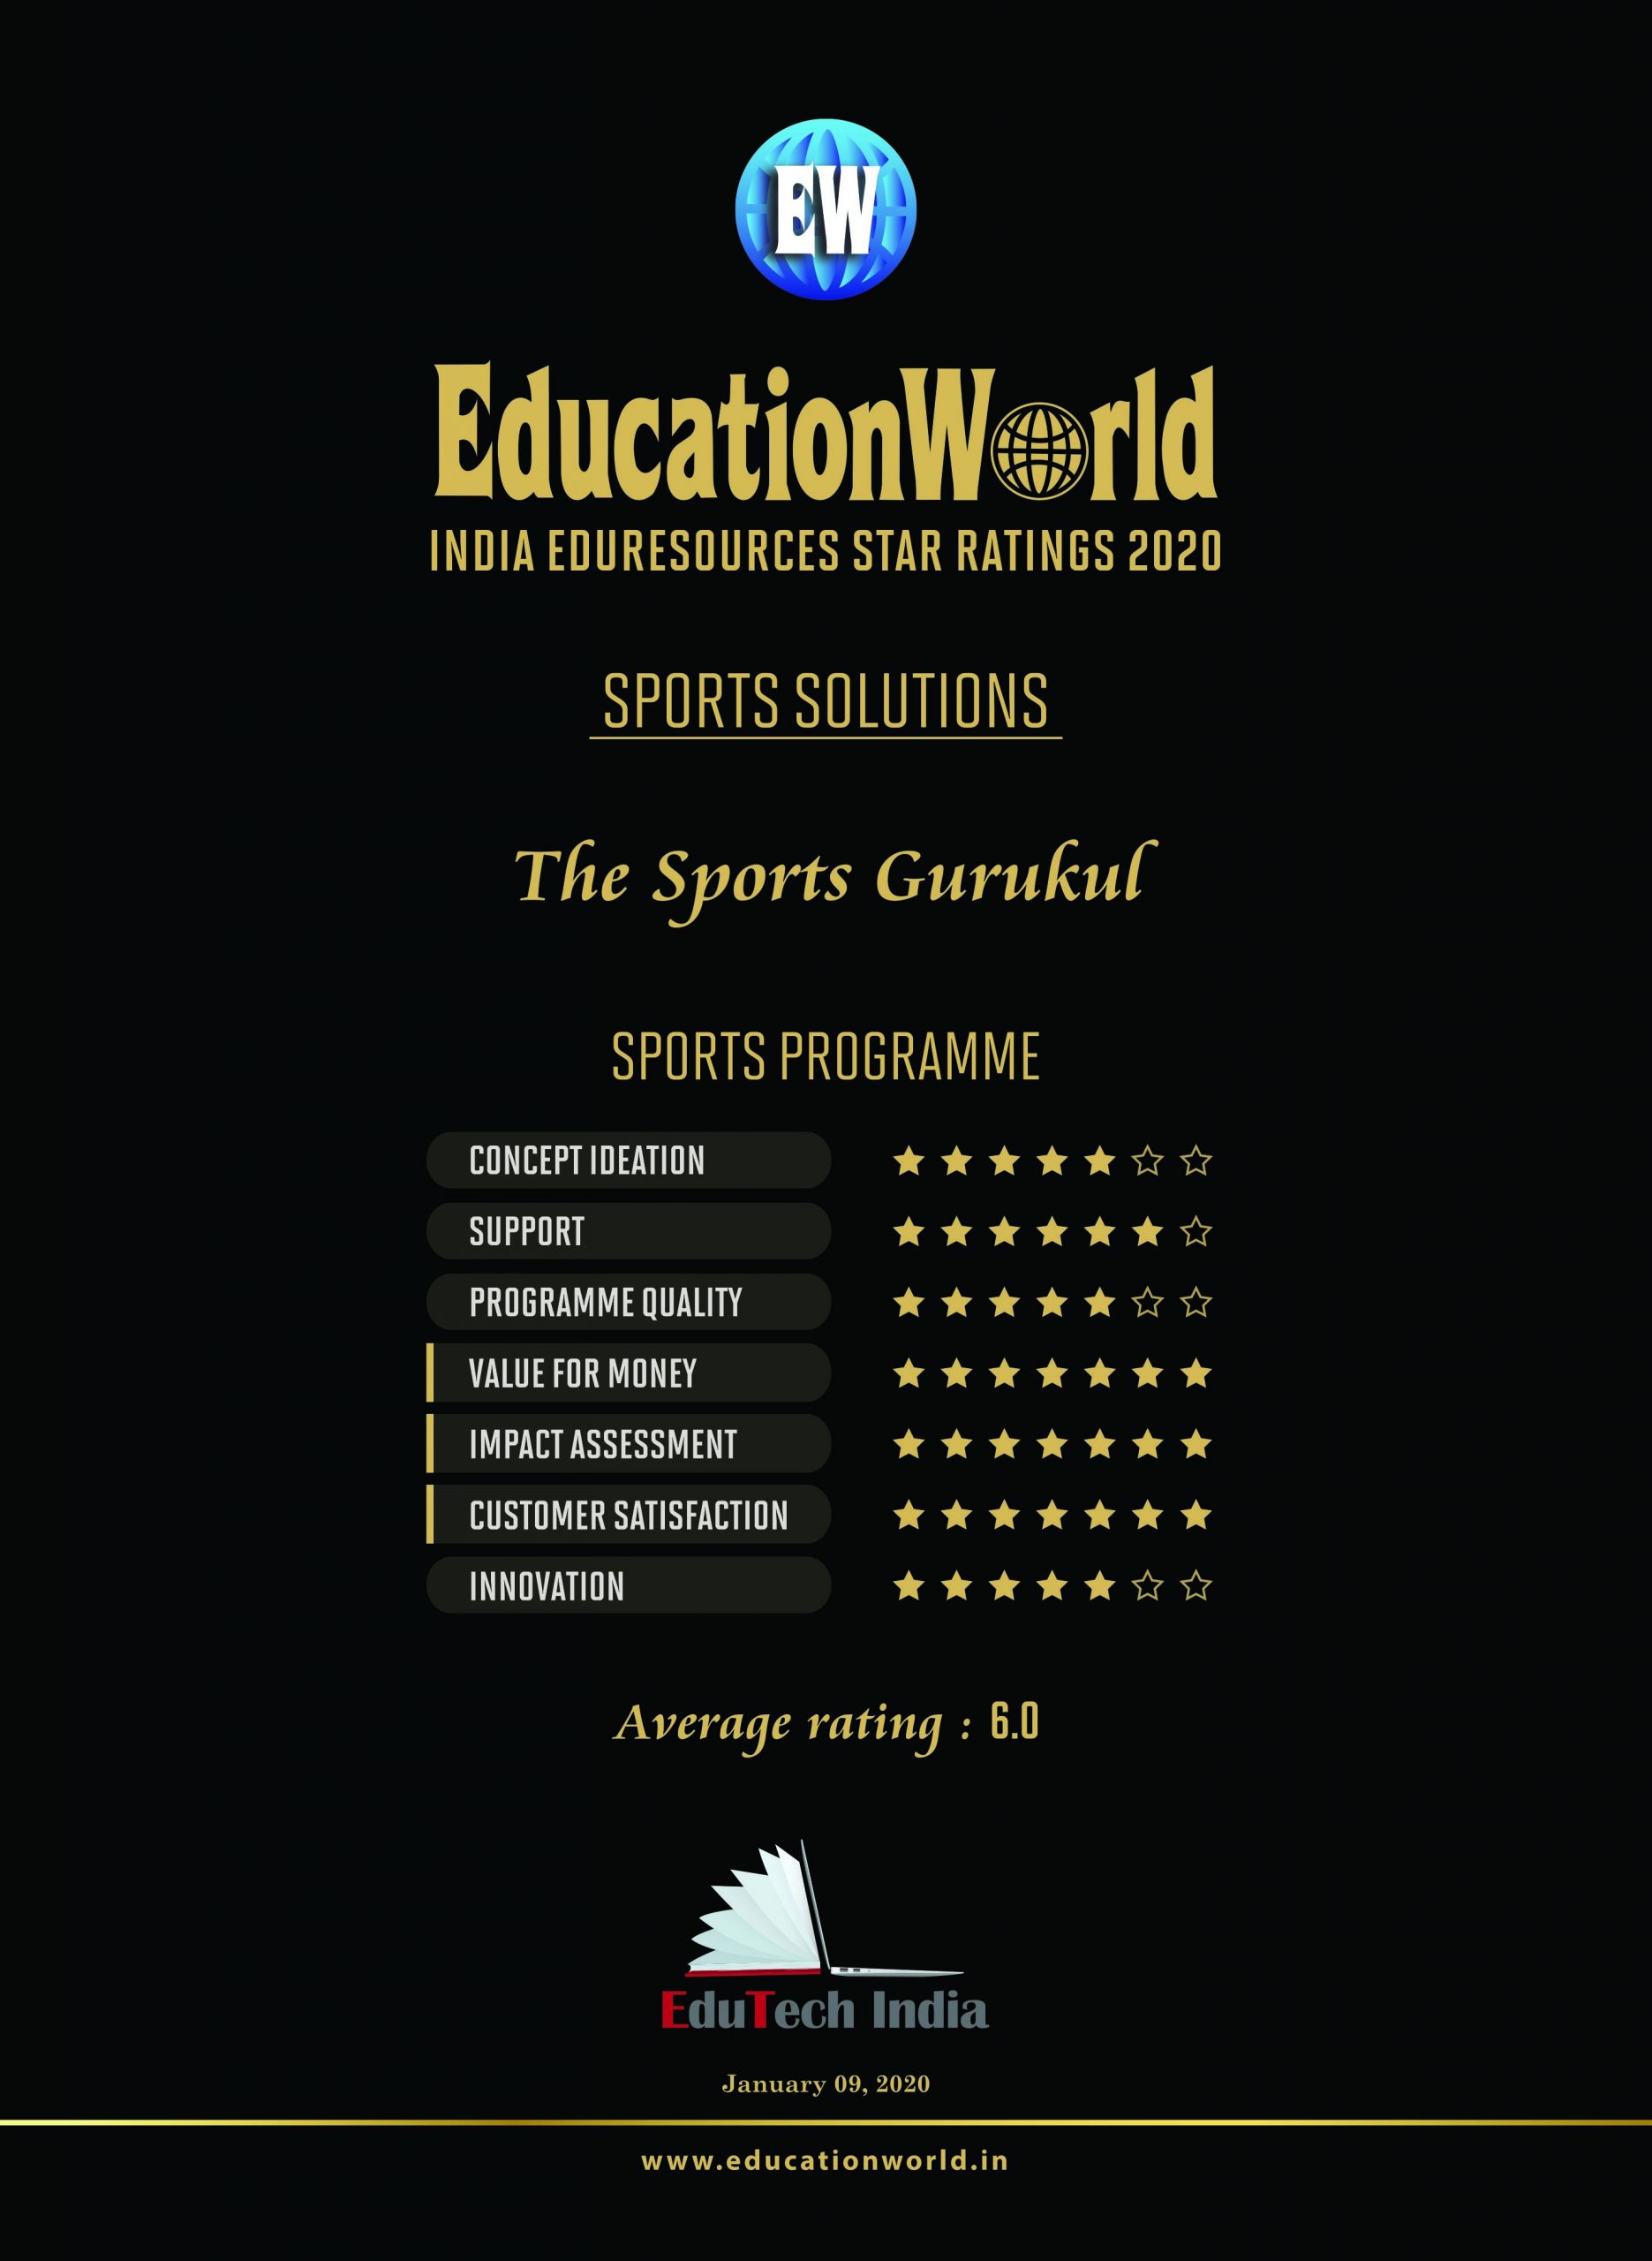 The Sports Gurukul (TSG)